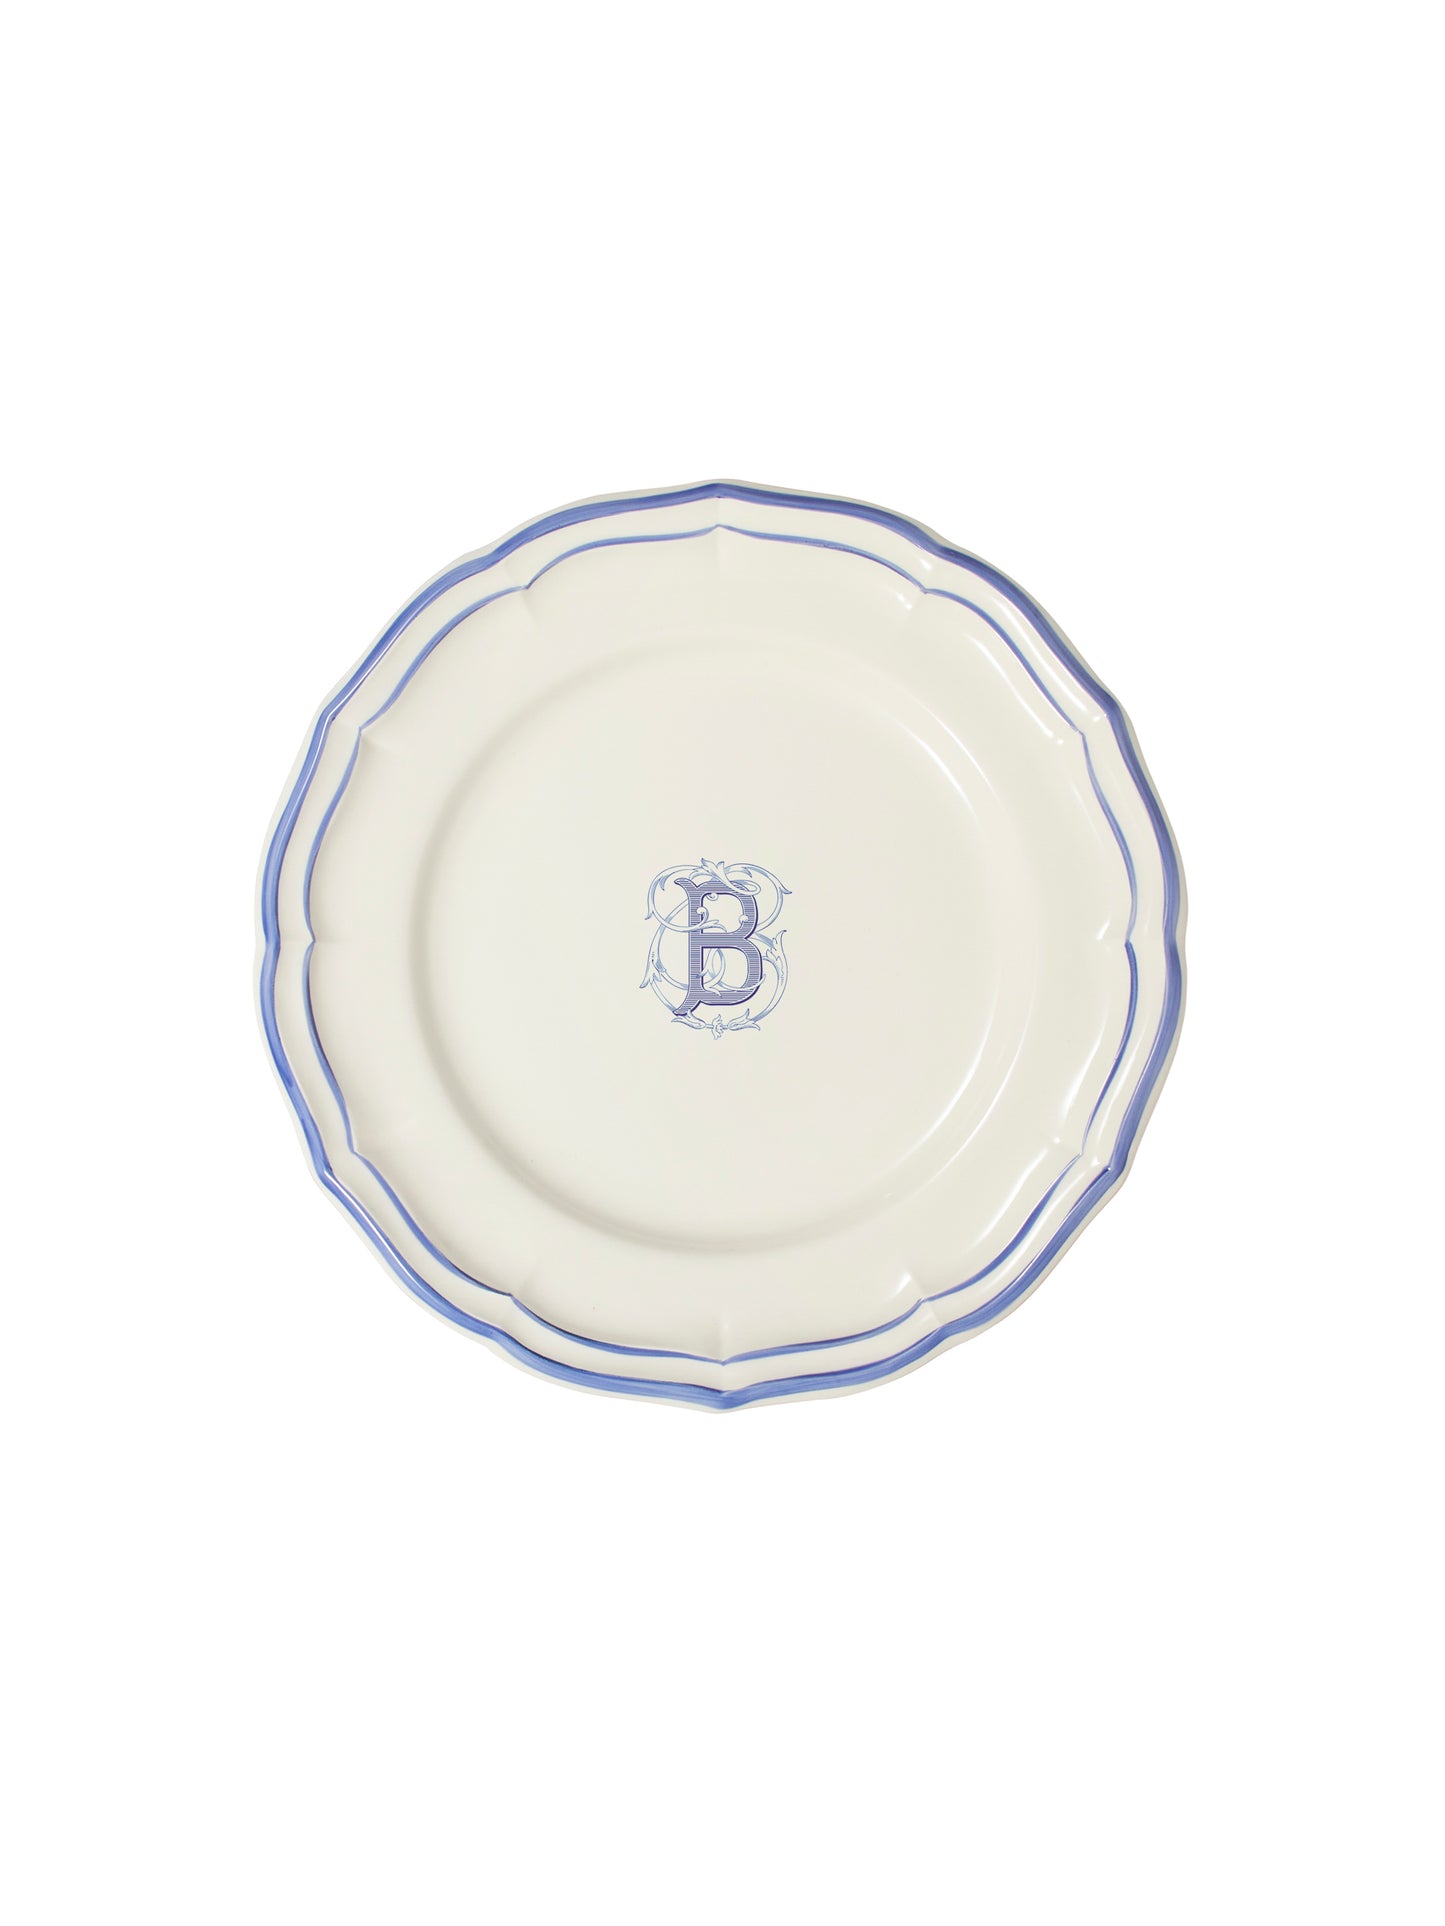 Gien Filet Bleu Monogram Salad Plate B Weston Table